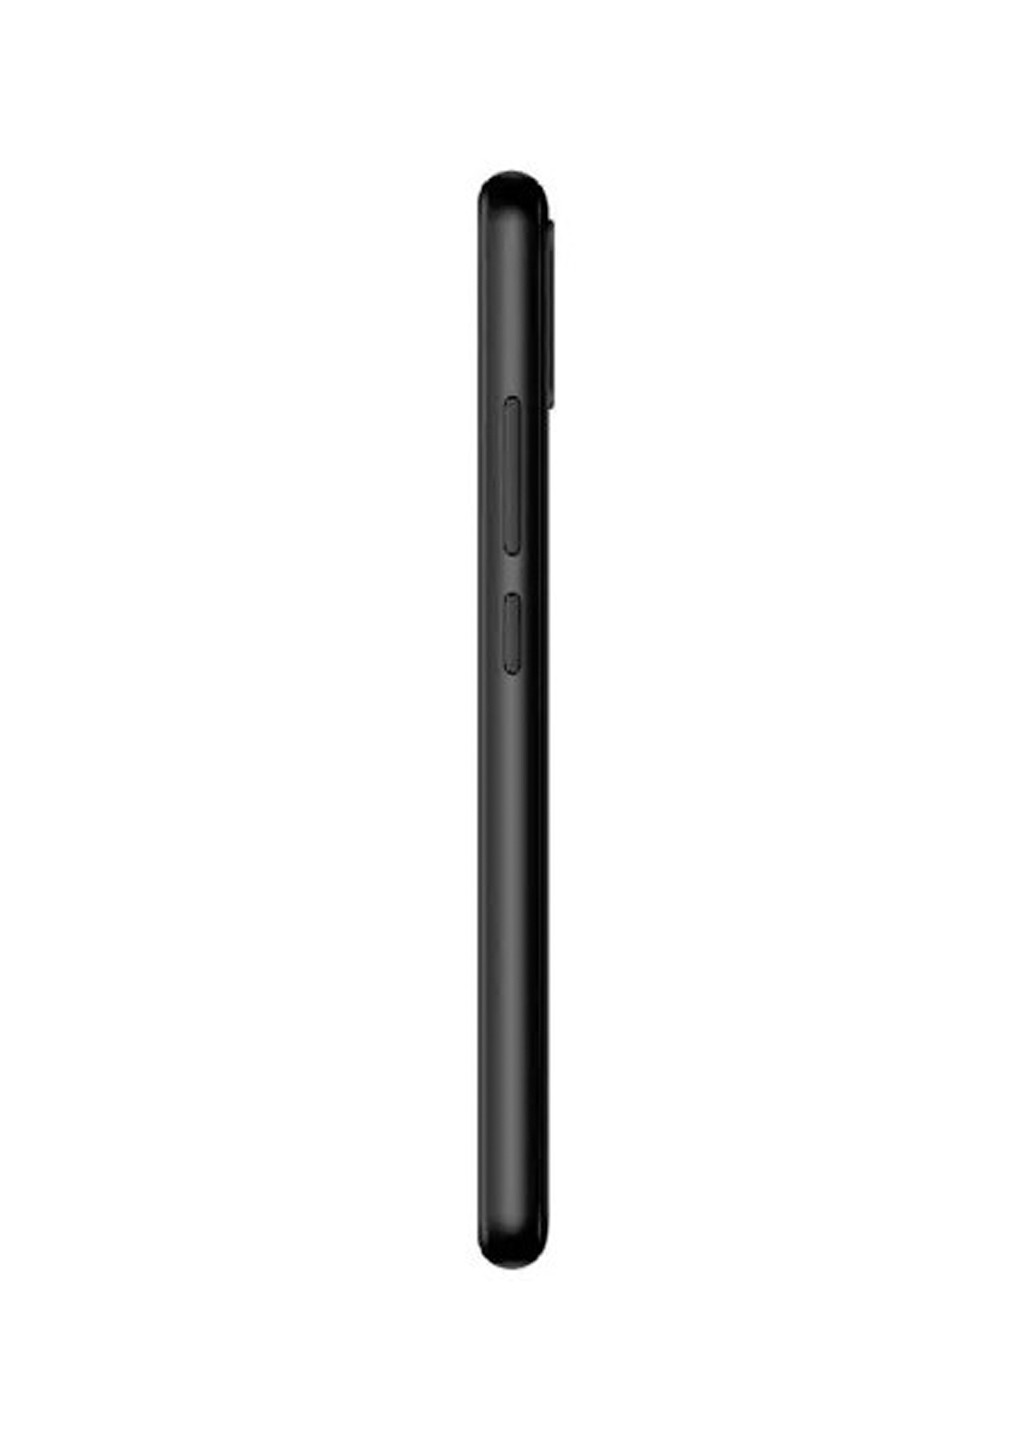 Смартфон Blackview a30 2/16gb black (165147913)